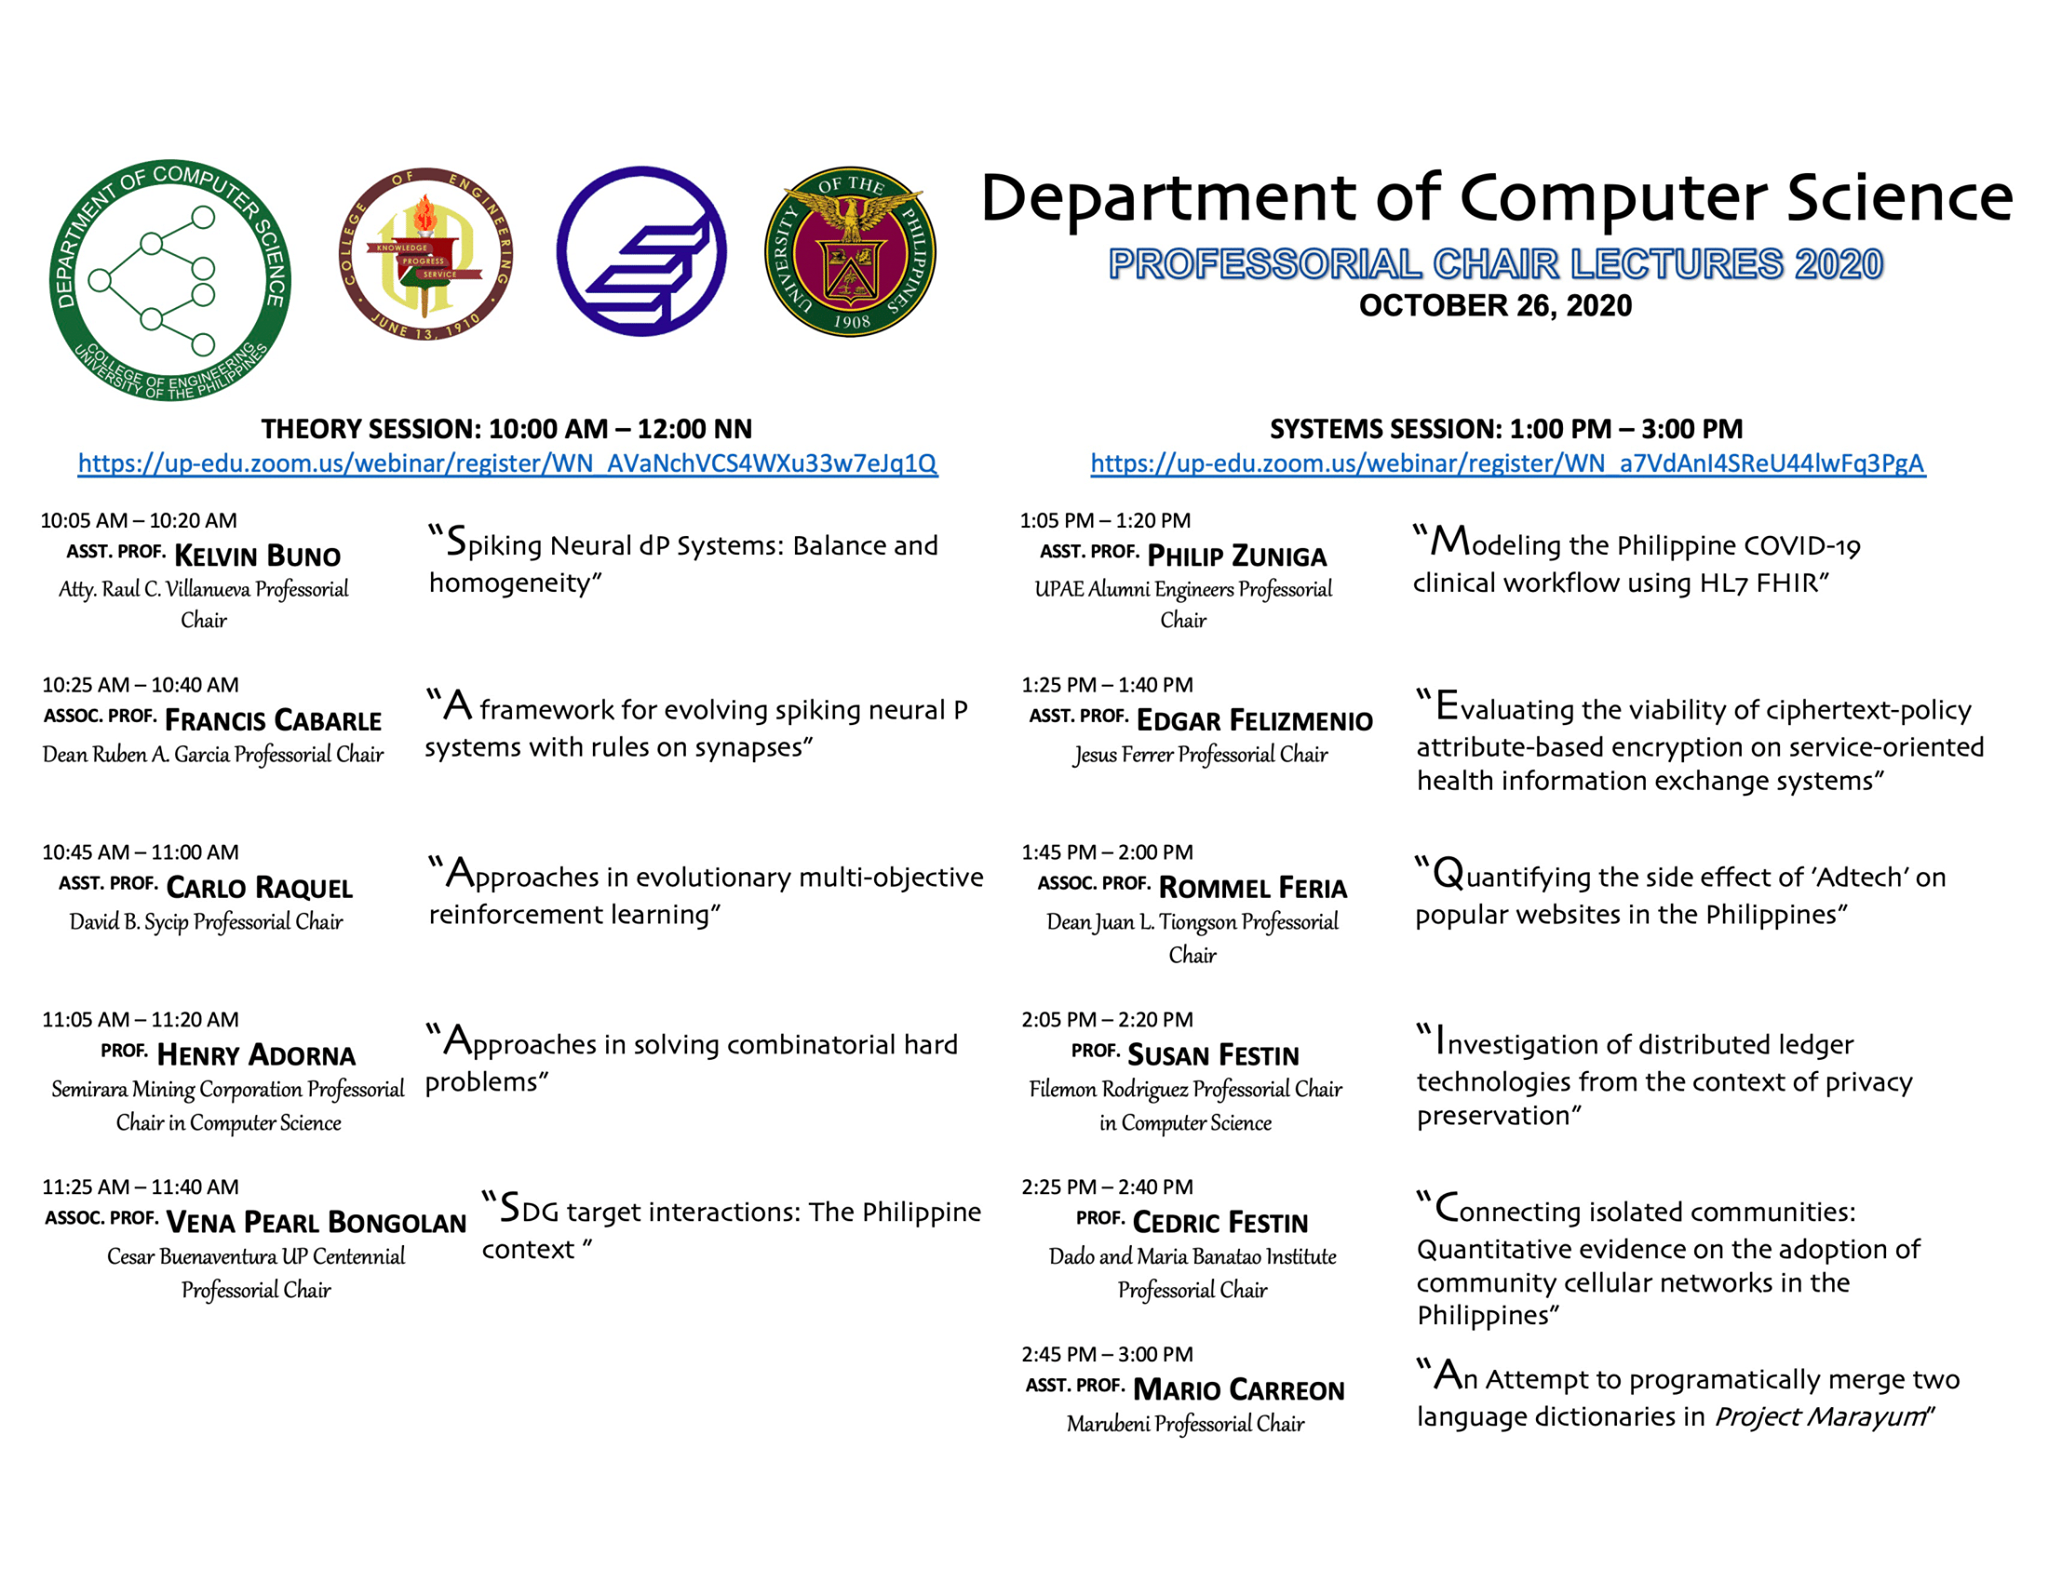 UP Department of Computer Science PCA (Professorial Chair Awards) Colloquium